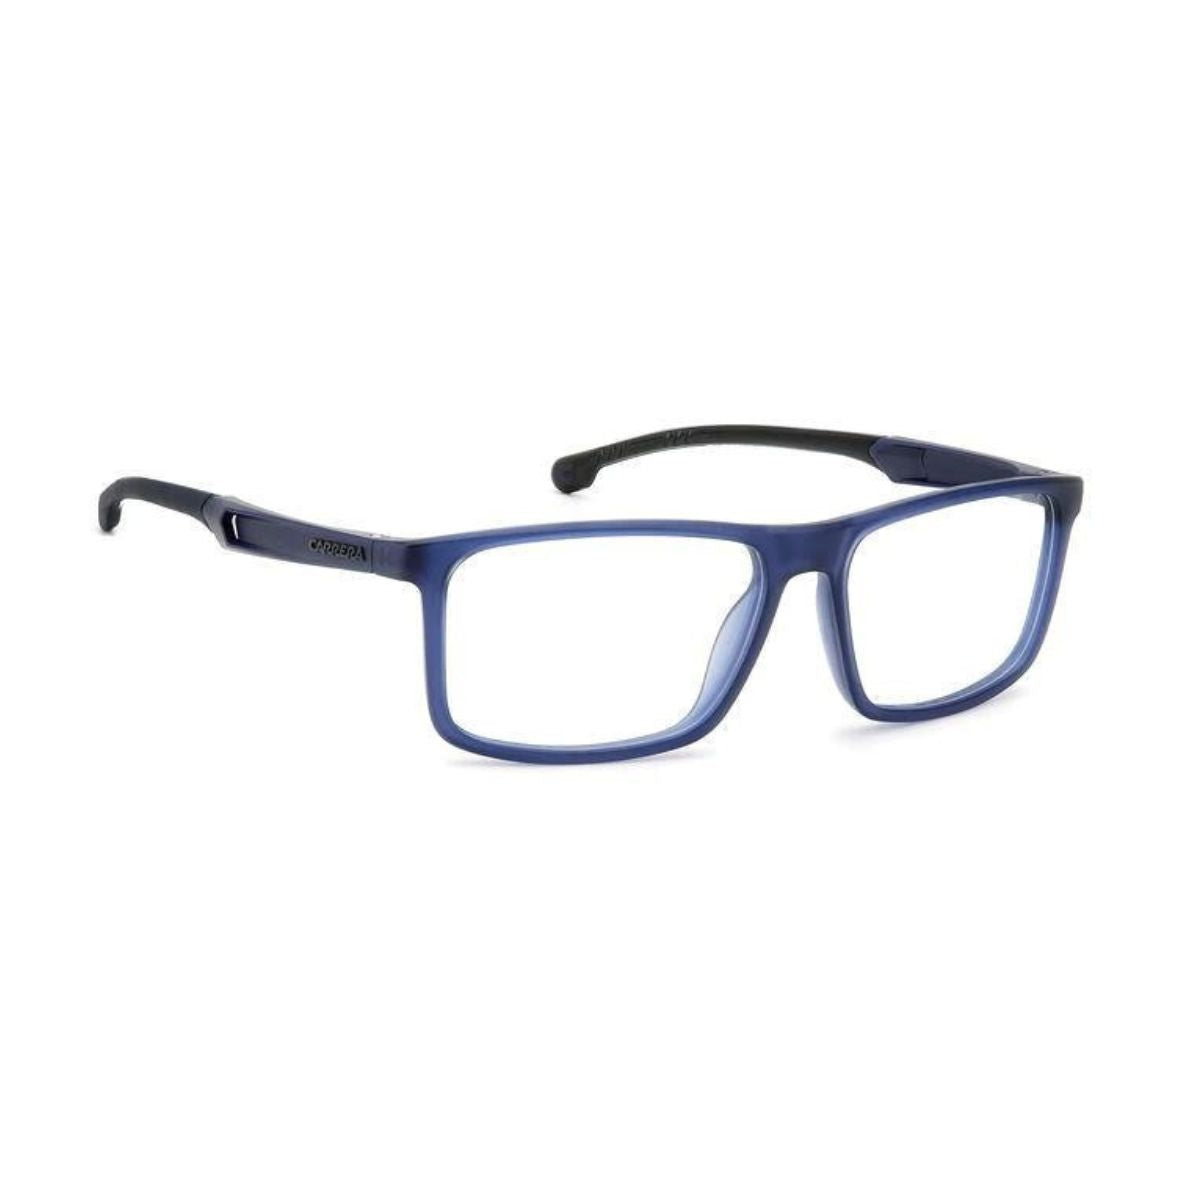 "shop Carrera CARDUC 024 FLL eyesight glasses frame for men's online at optorium"